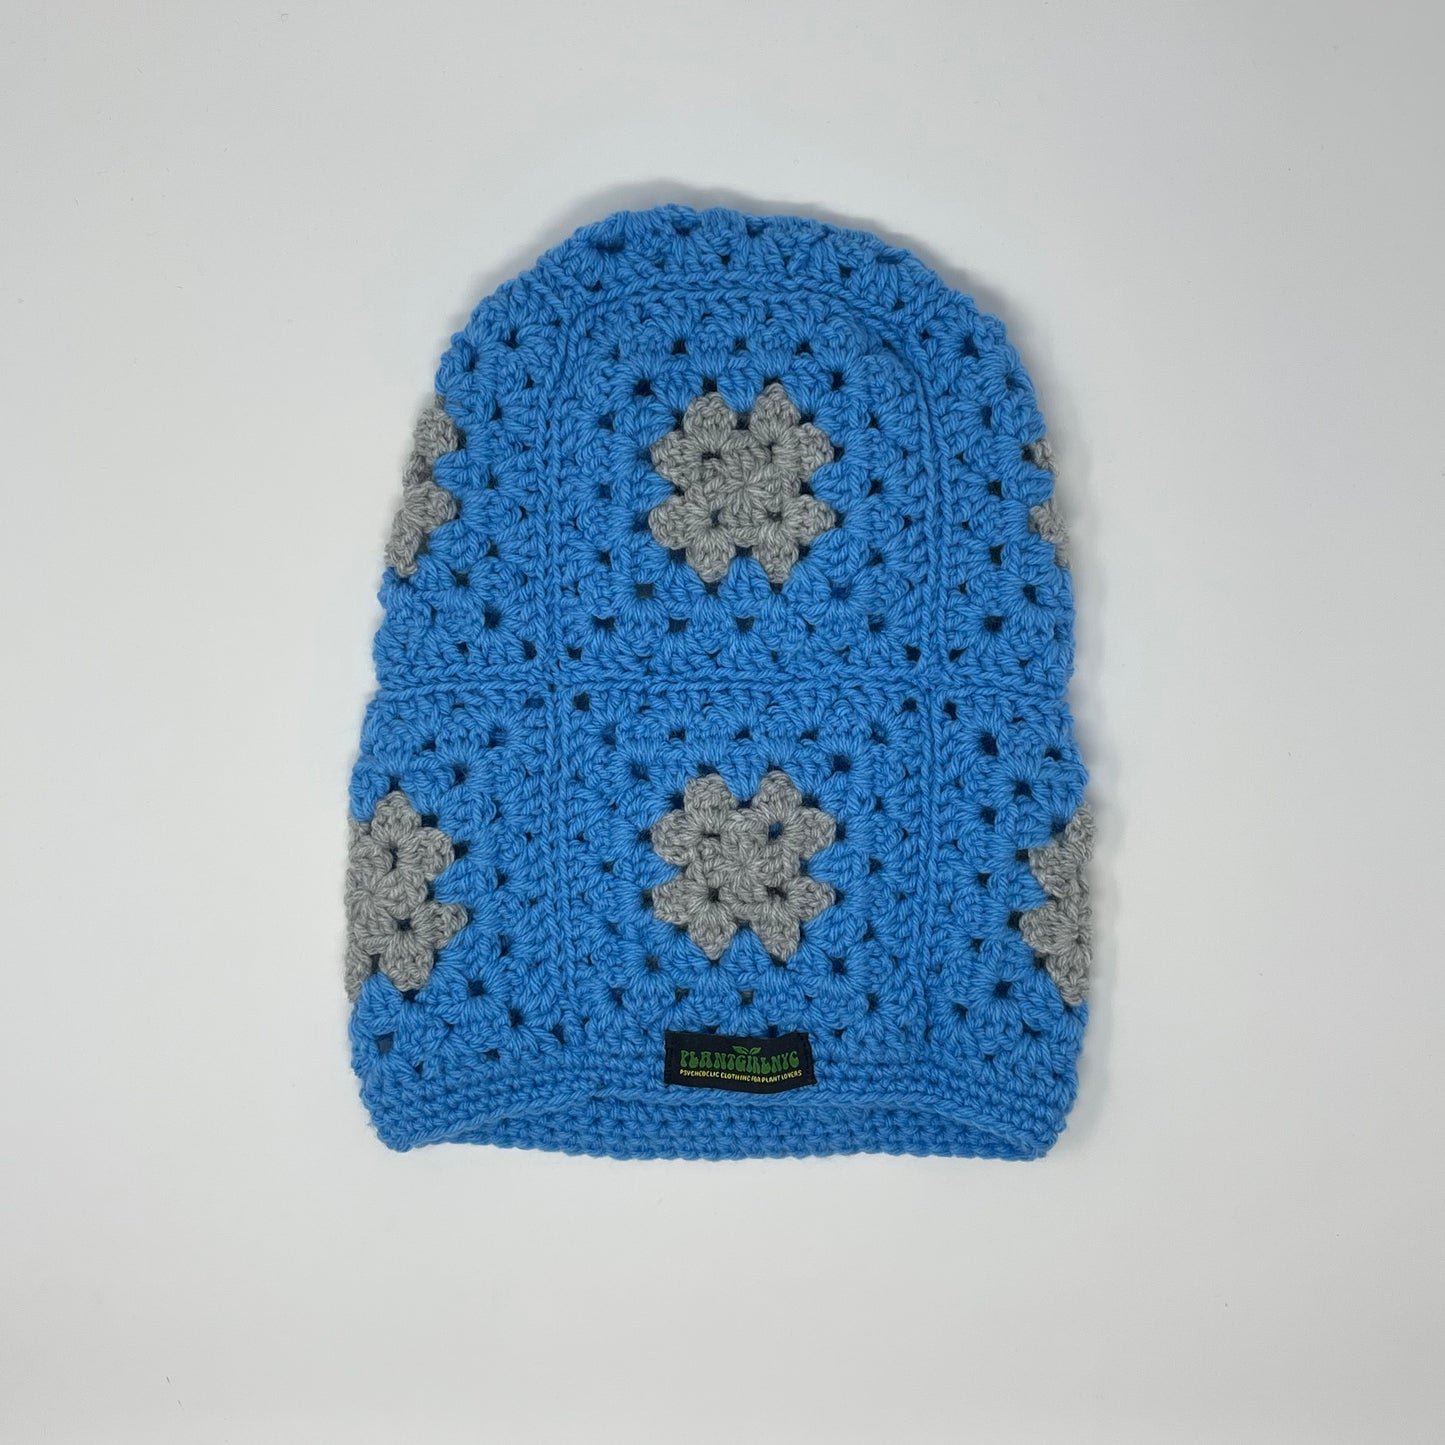 Crochet Balaclava - Light Blue & Grey